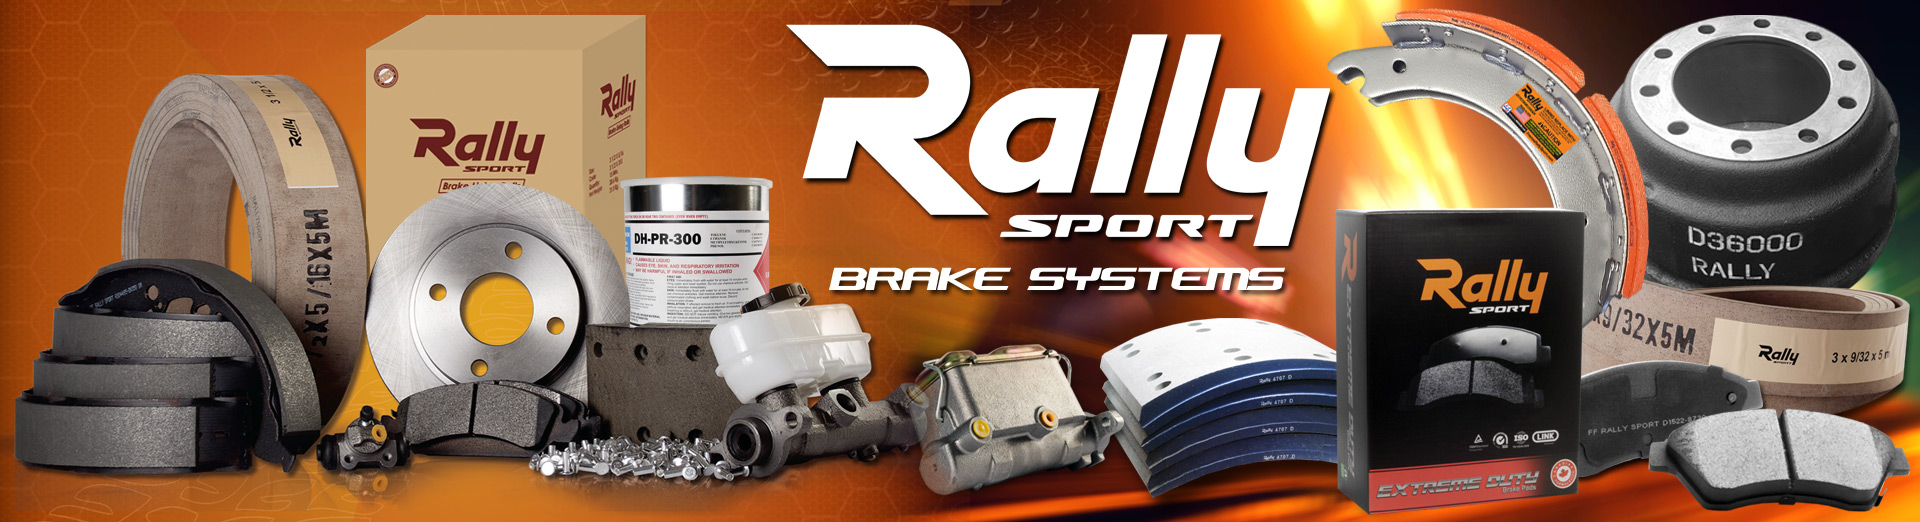 RallySport-PRODUCTS-BannerTop-1920×522-1